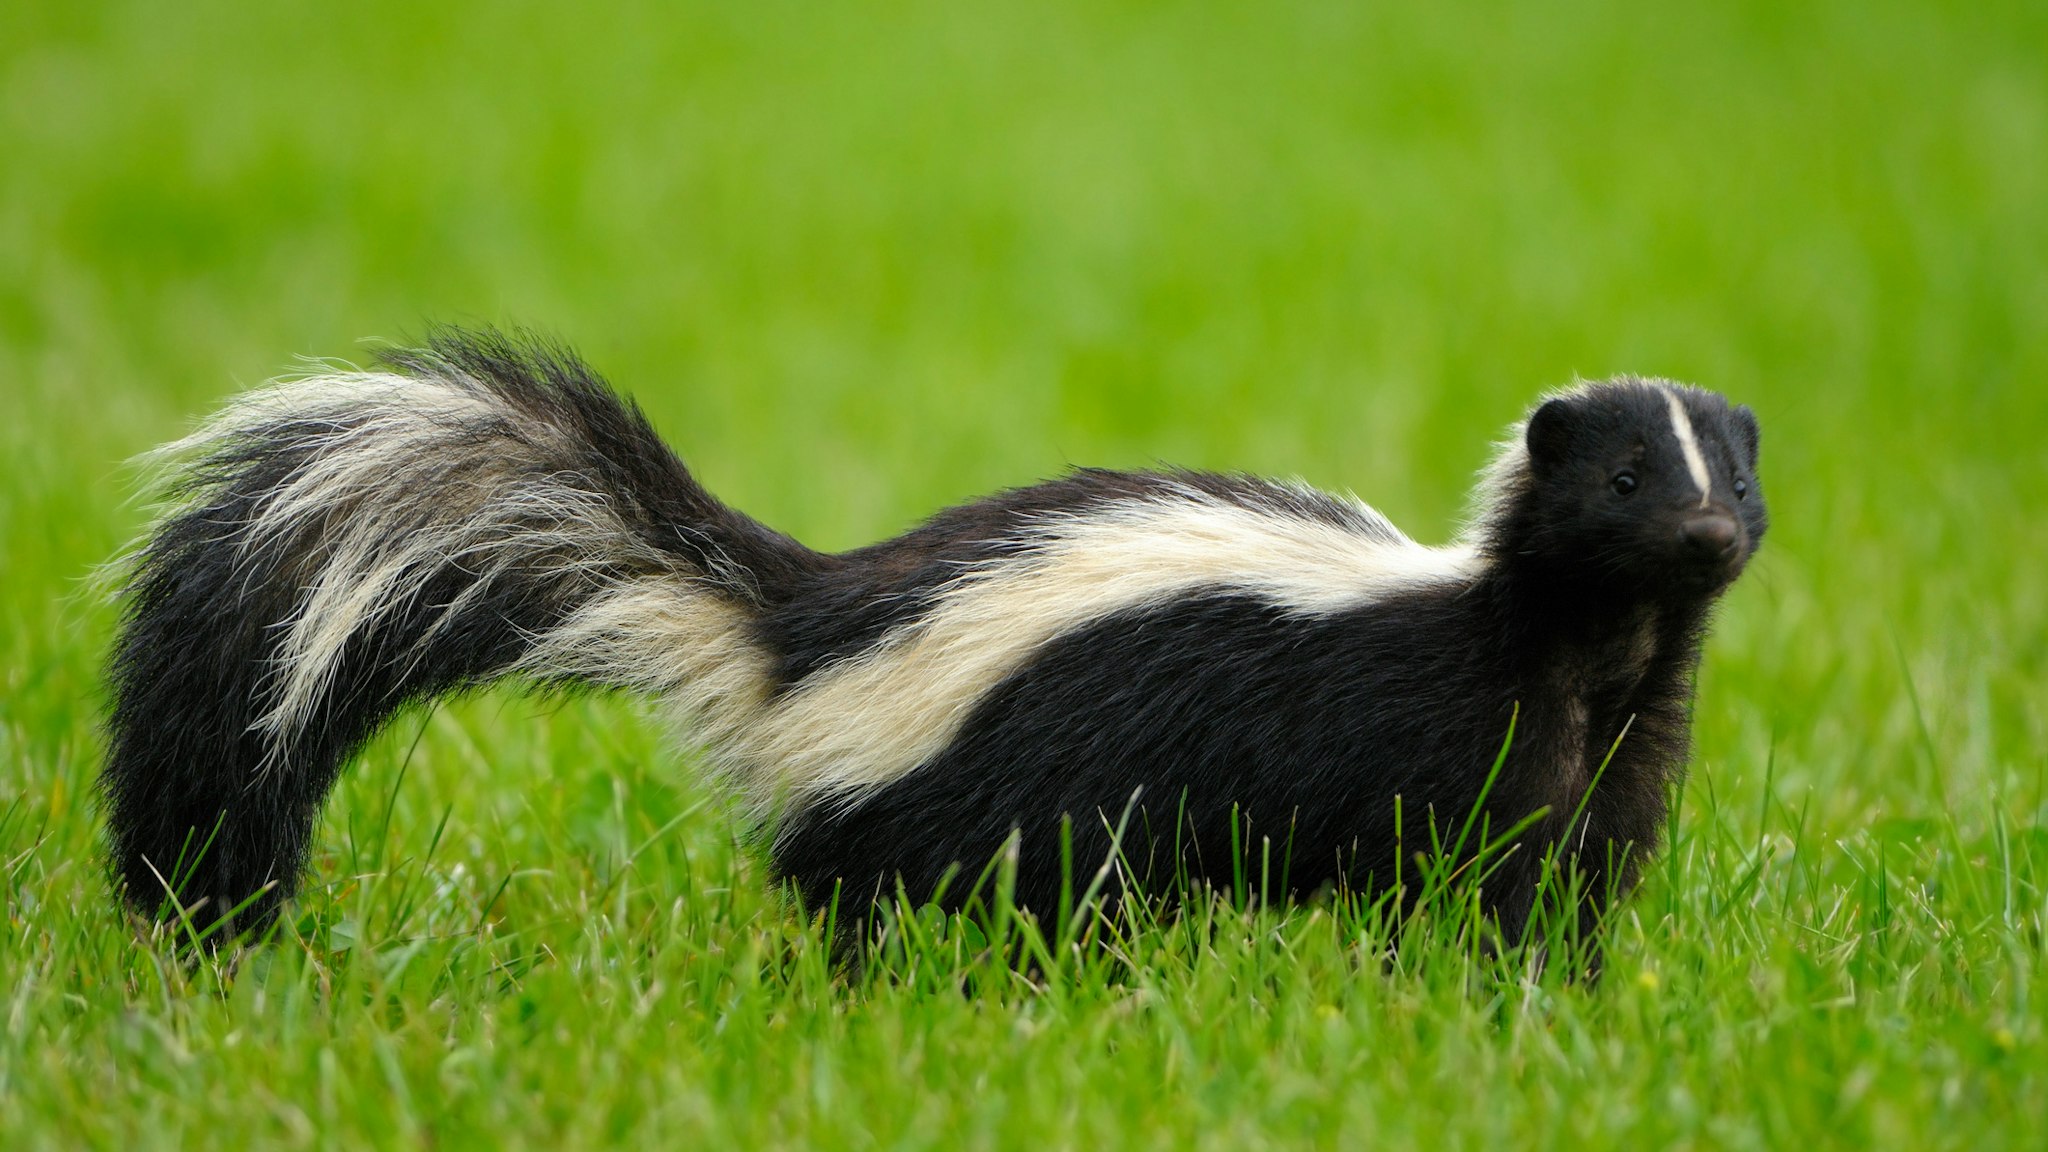 Portrait of skunk in grass - stock photo